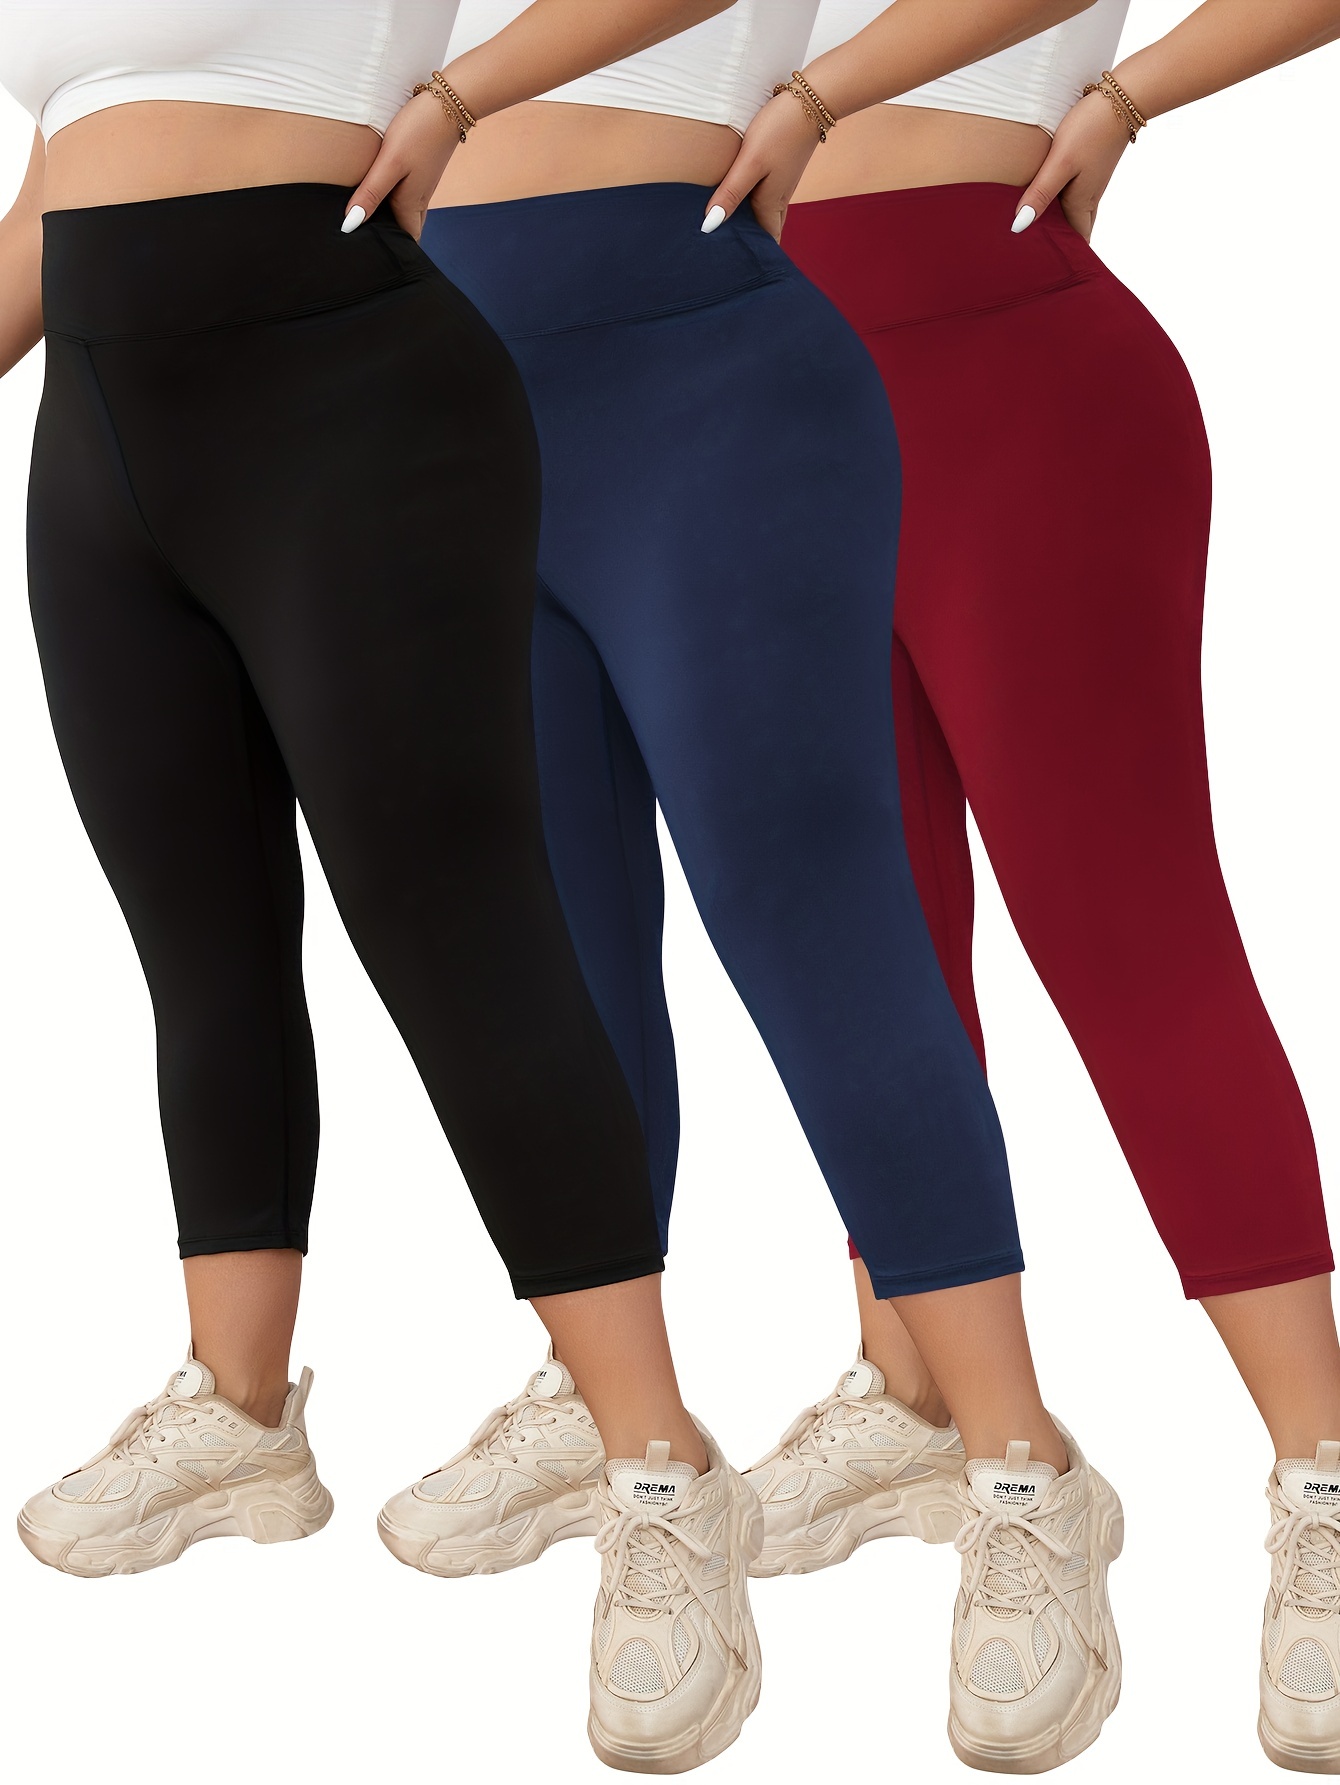 Ladies Capri Sports Leggings Leggjngs Trouser Women Jeggings Pack